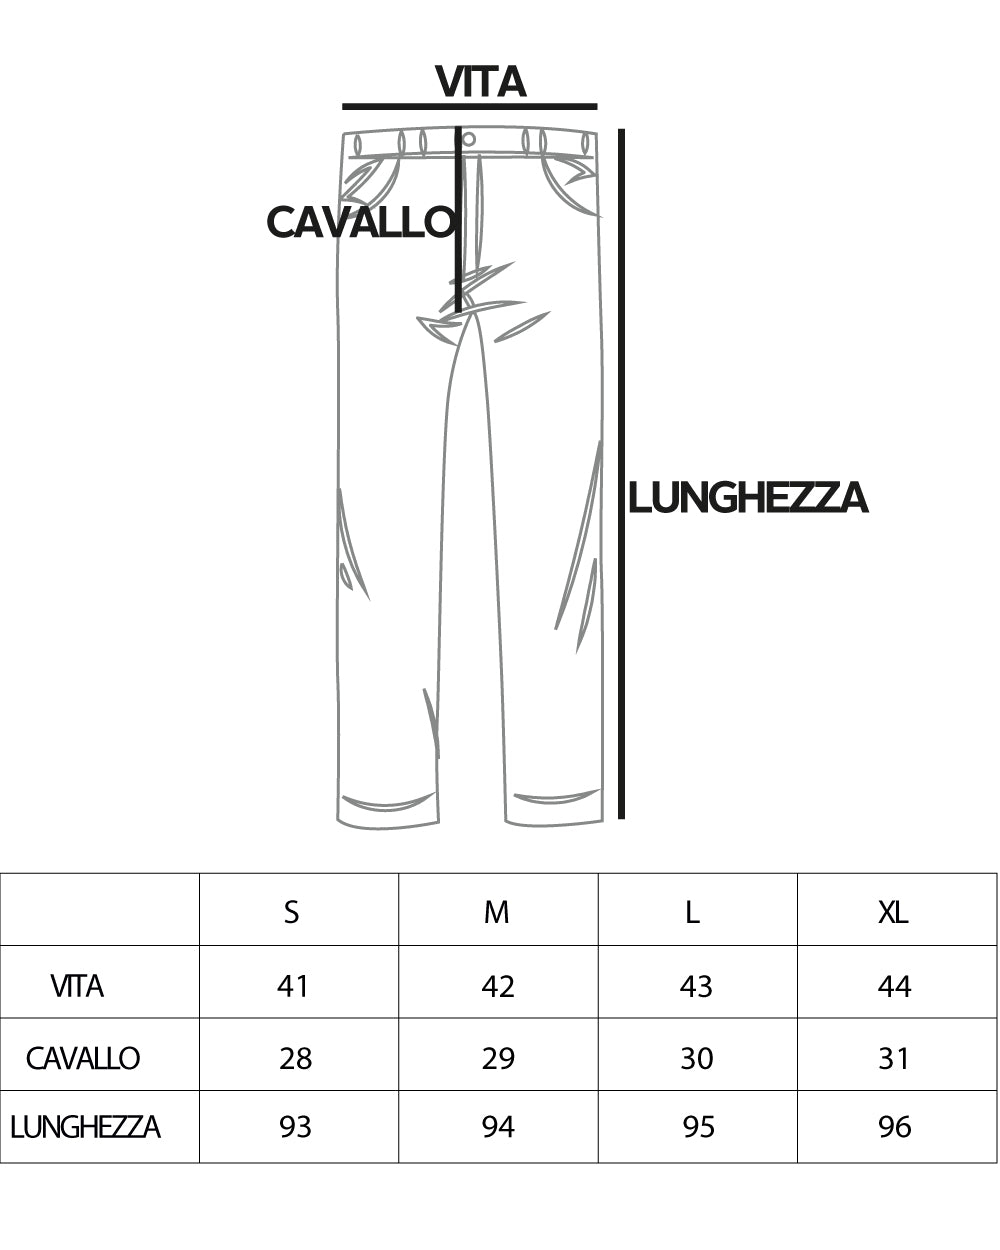 Pantaloni Uomo Tasca America Classico Viscosa Fibbia Casual Denim GIOSAL-P5626A